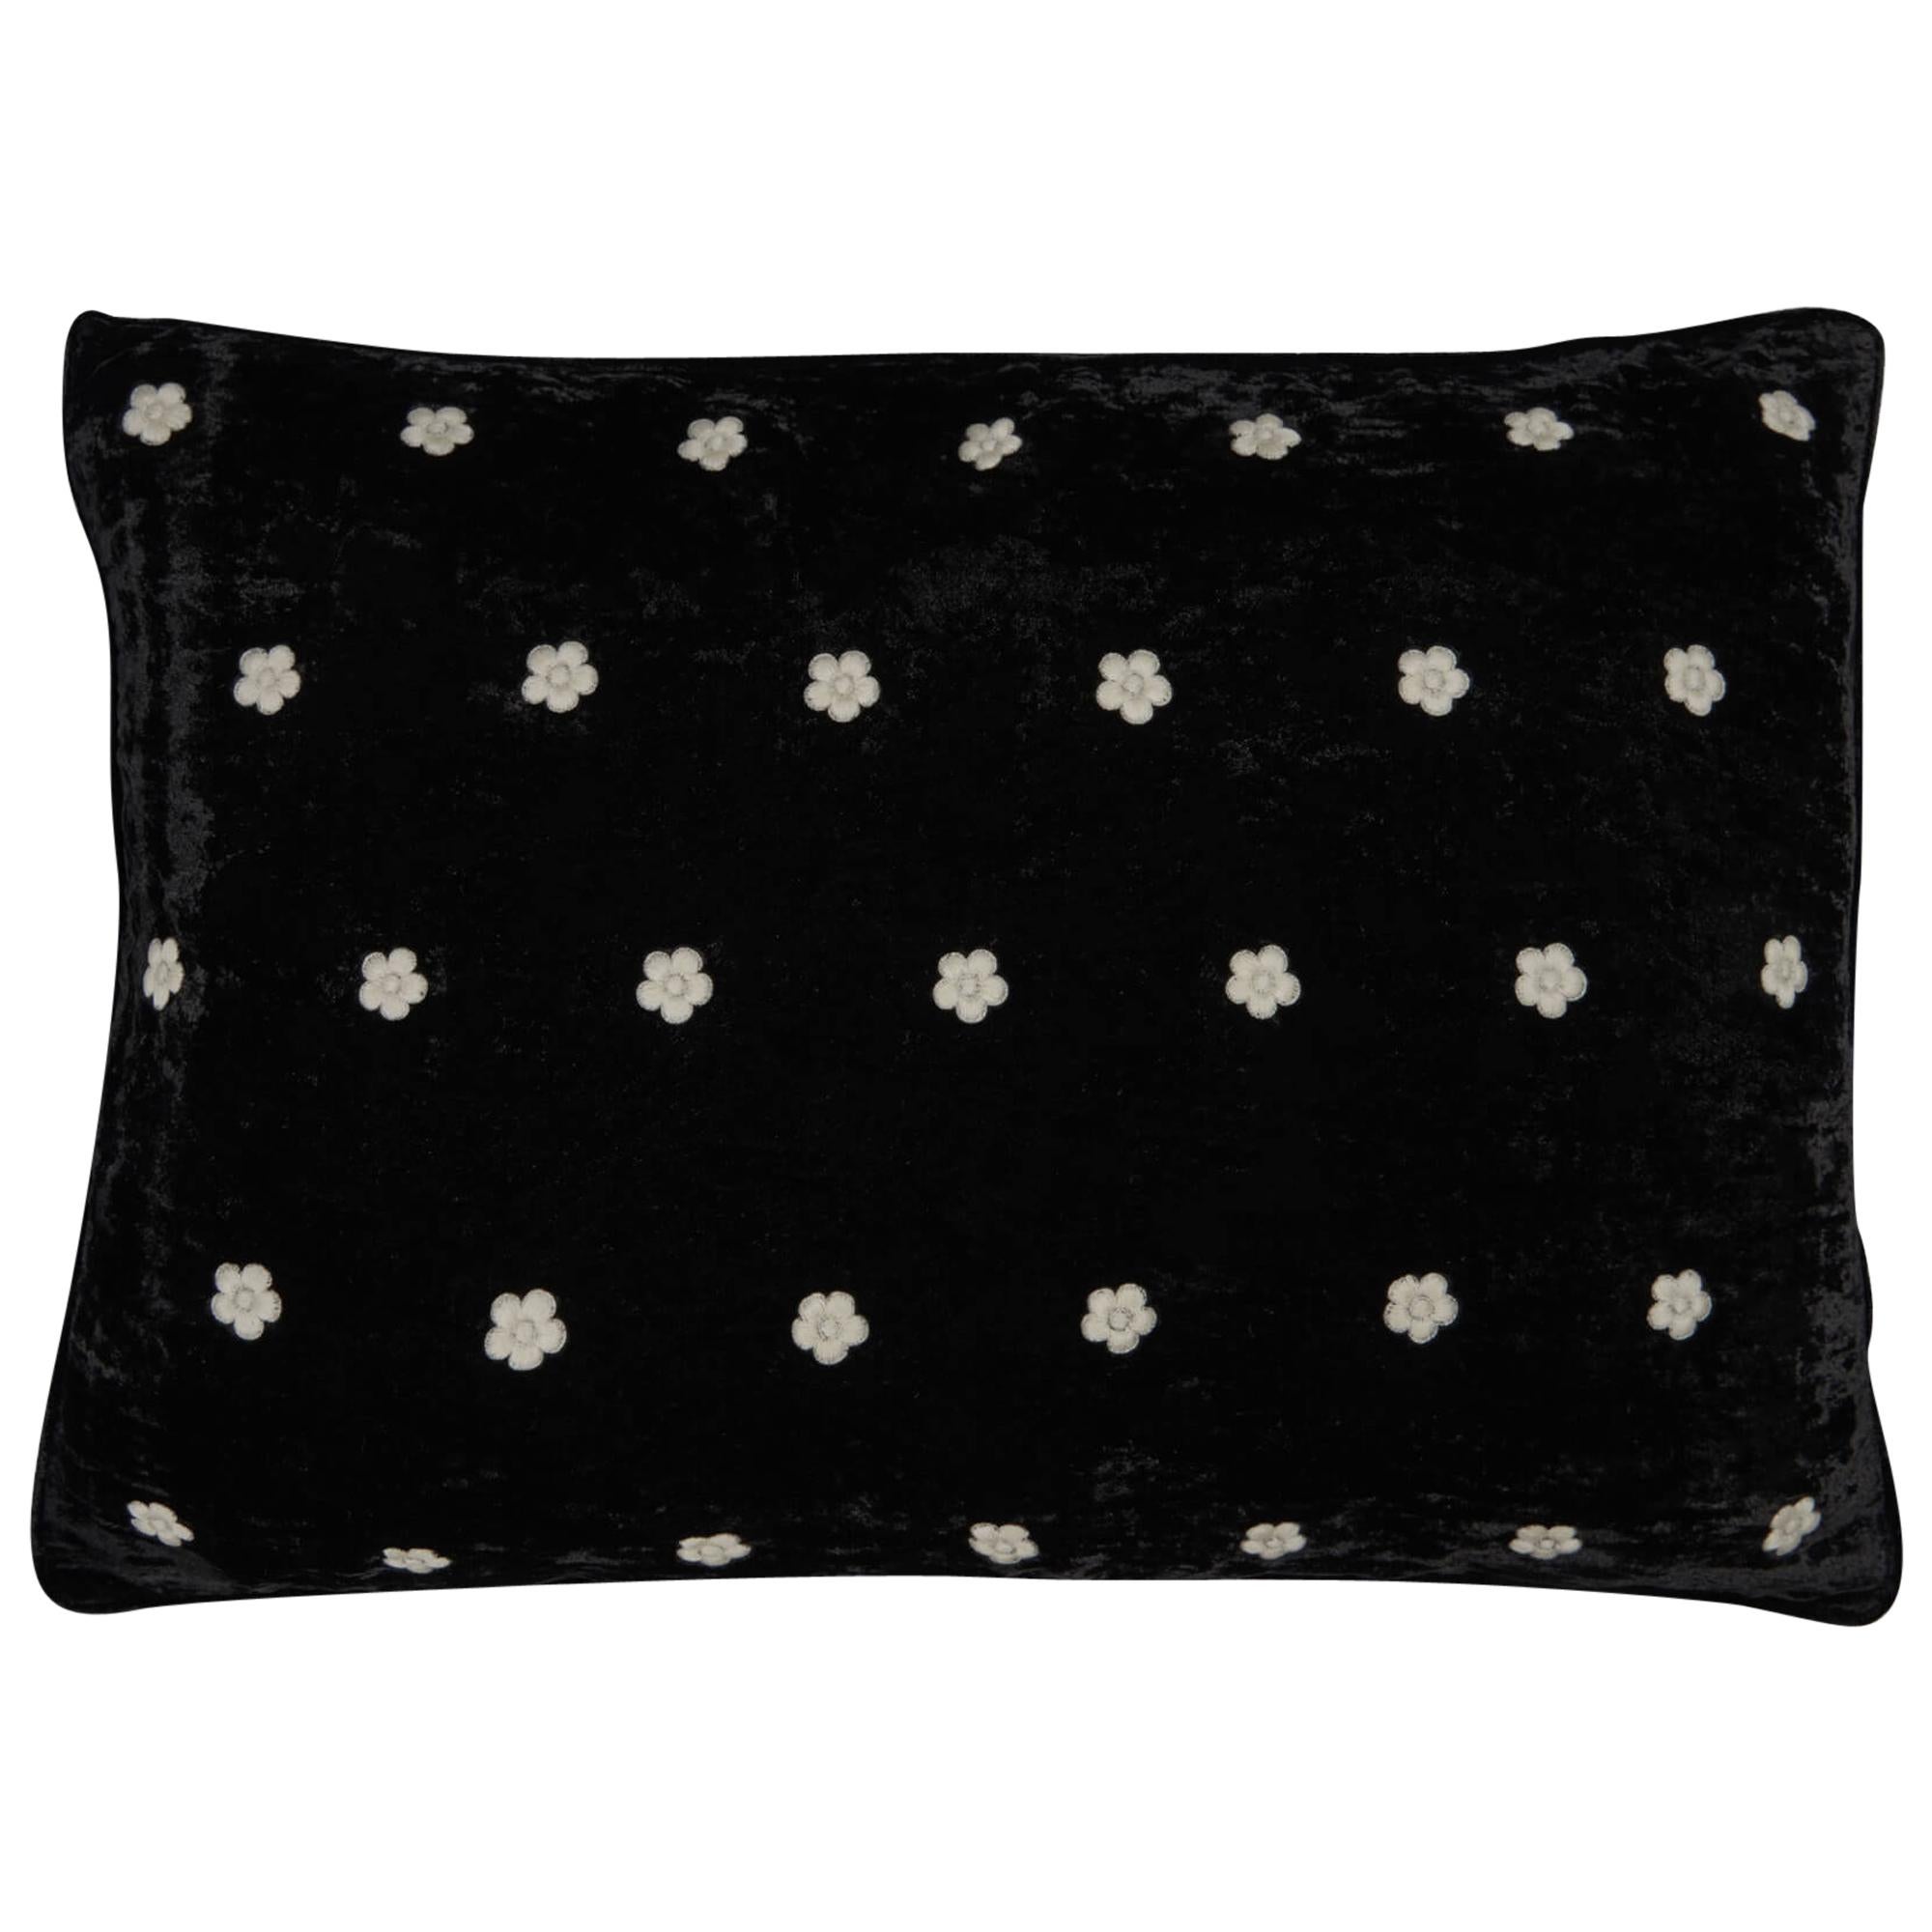 Broad Hand Embroidered Black Velvet Pillow Cover